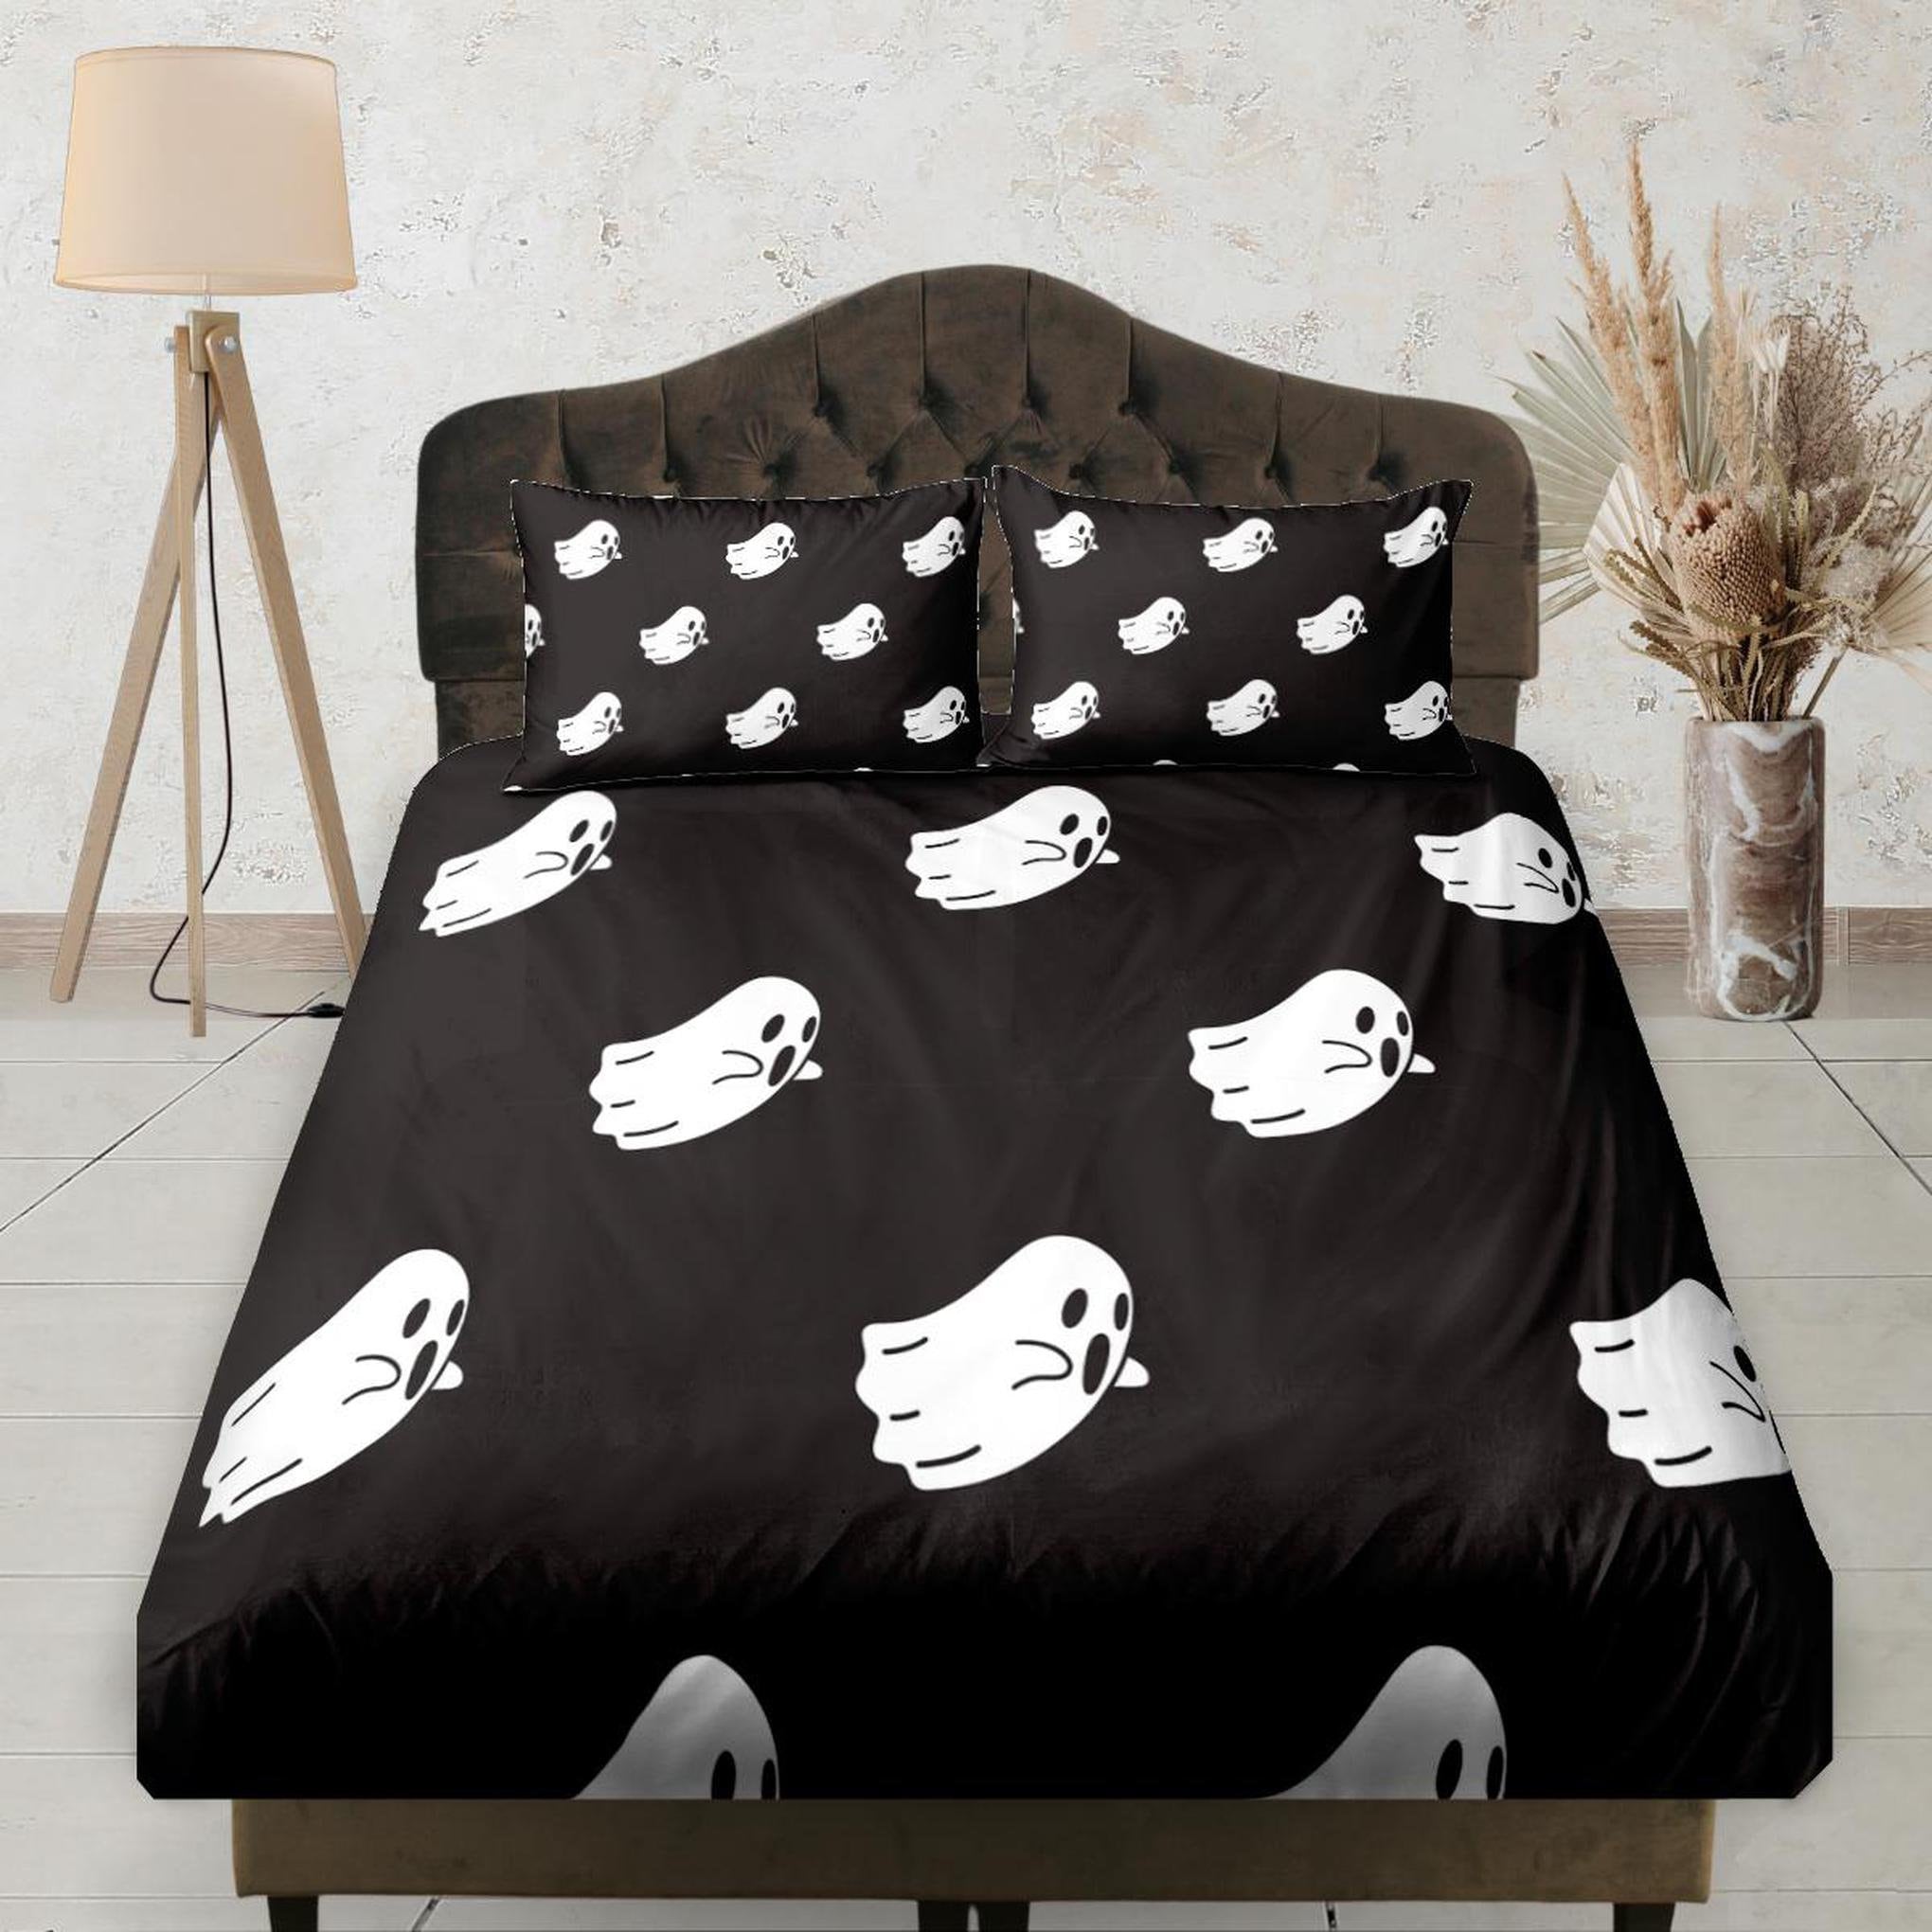 daintyduvet Spooky Ghost Black Fitted Sheet Deep Pocket, Aesthetic Bedding Set Full, Elastic Bedsheet, Dorm Bedding, Crib Sheet, Size King, Queen, Twin